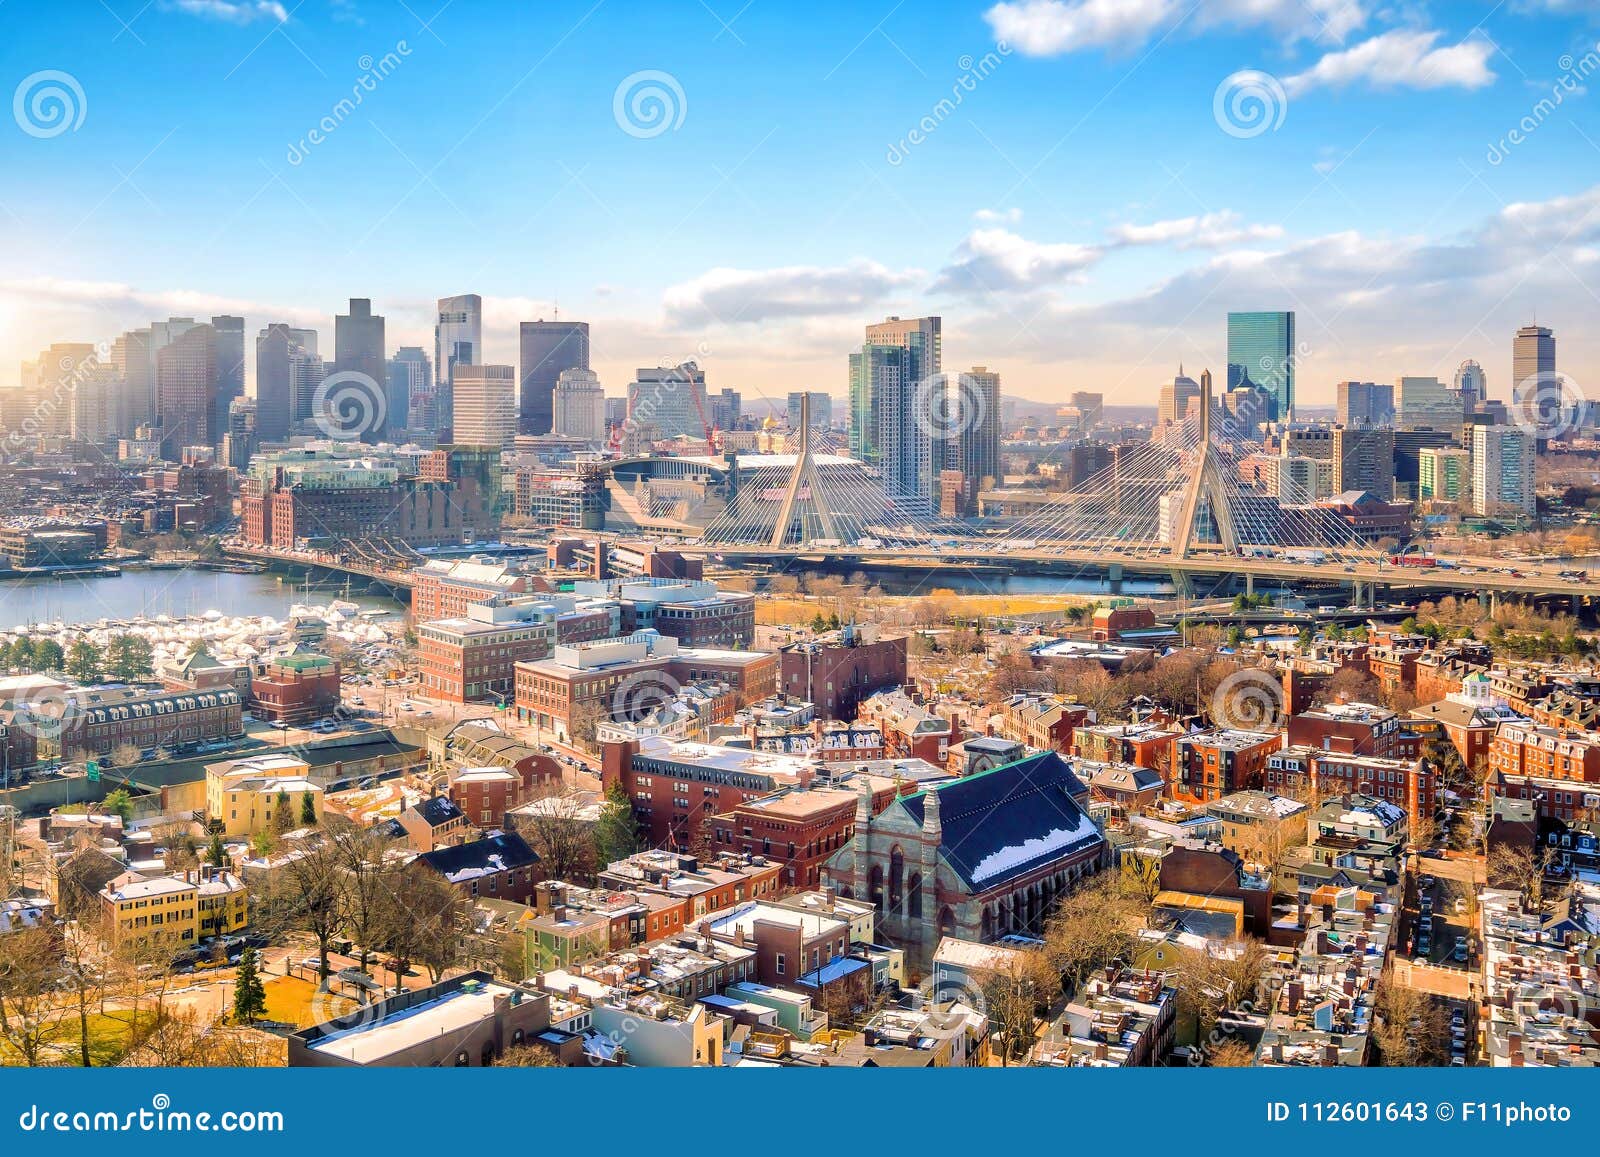 the skyline of boston in massachusetts, usa